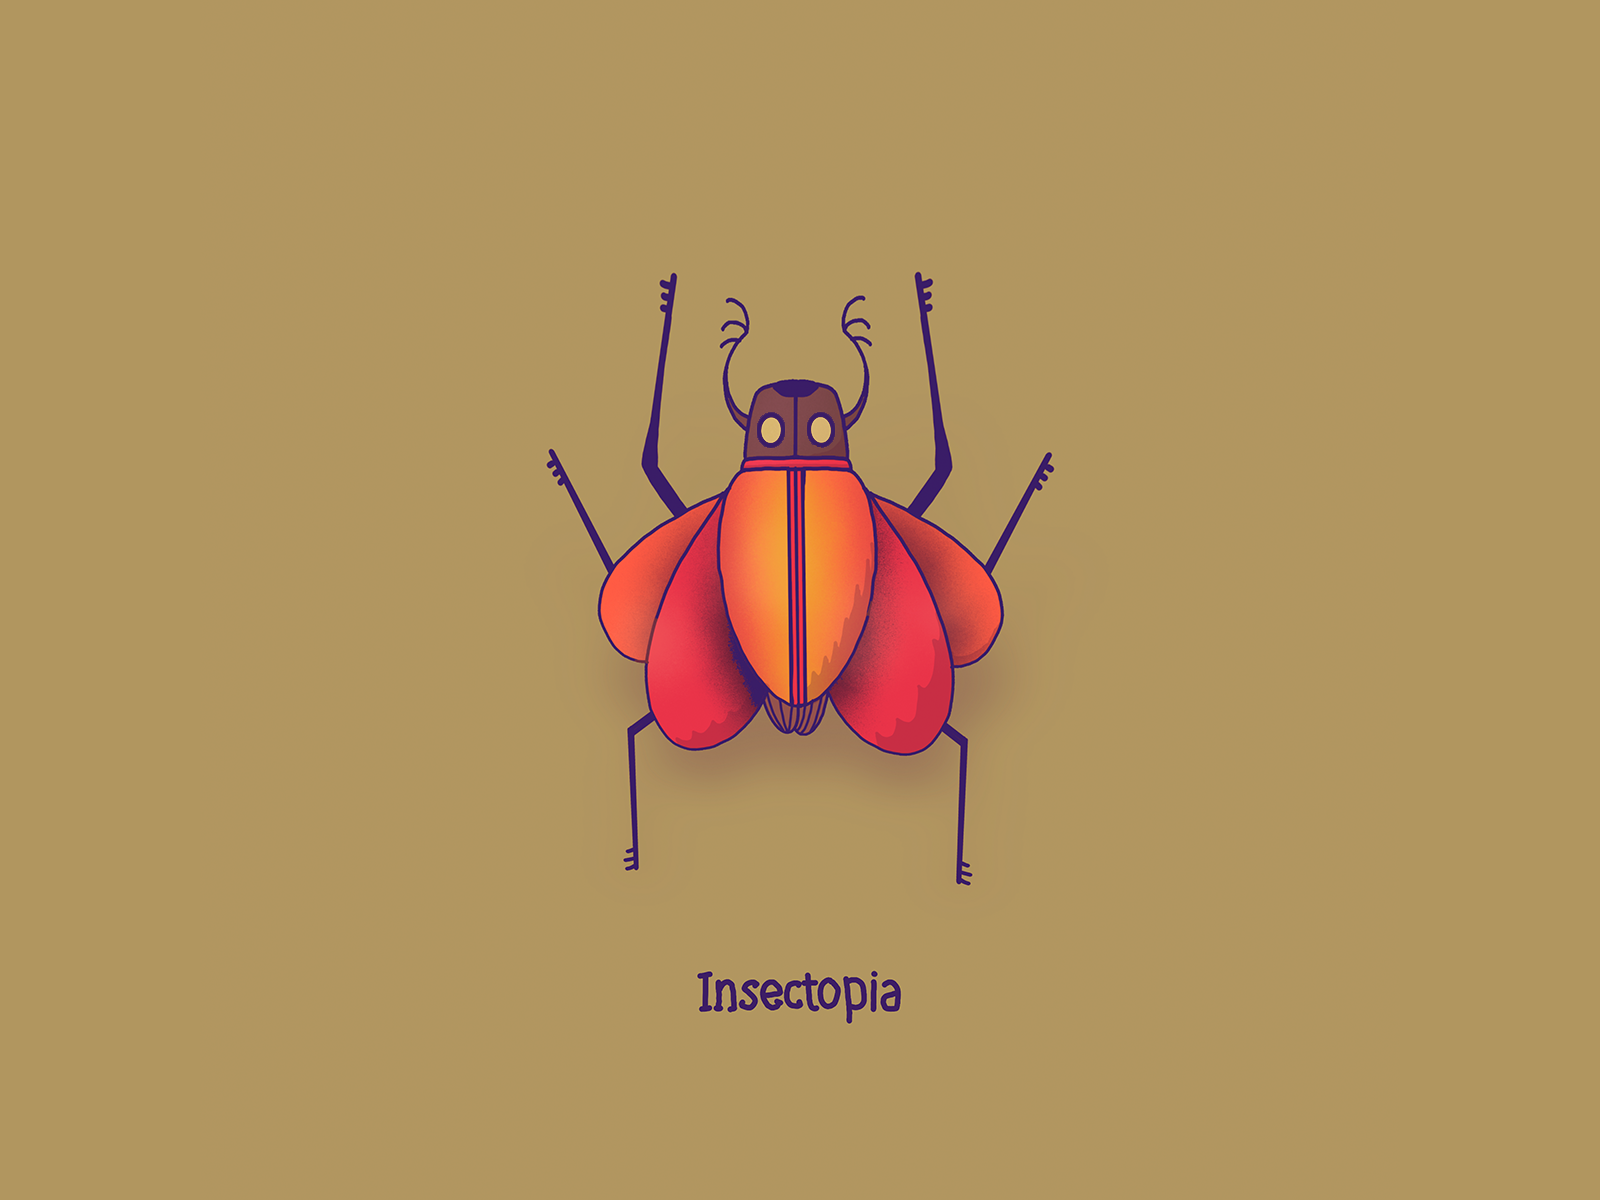 Bug 1 by Camilo Bejarano on Dribbble